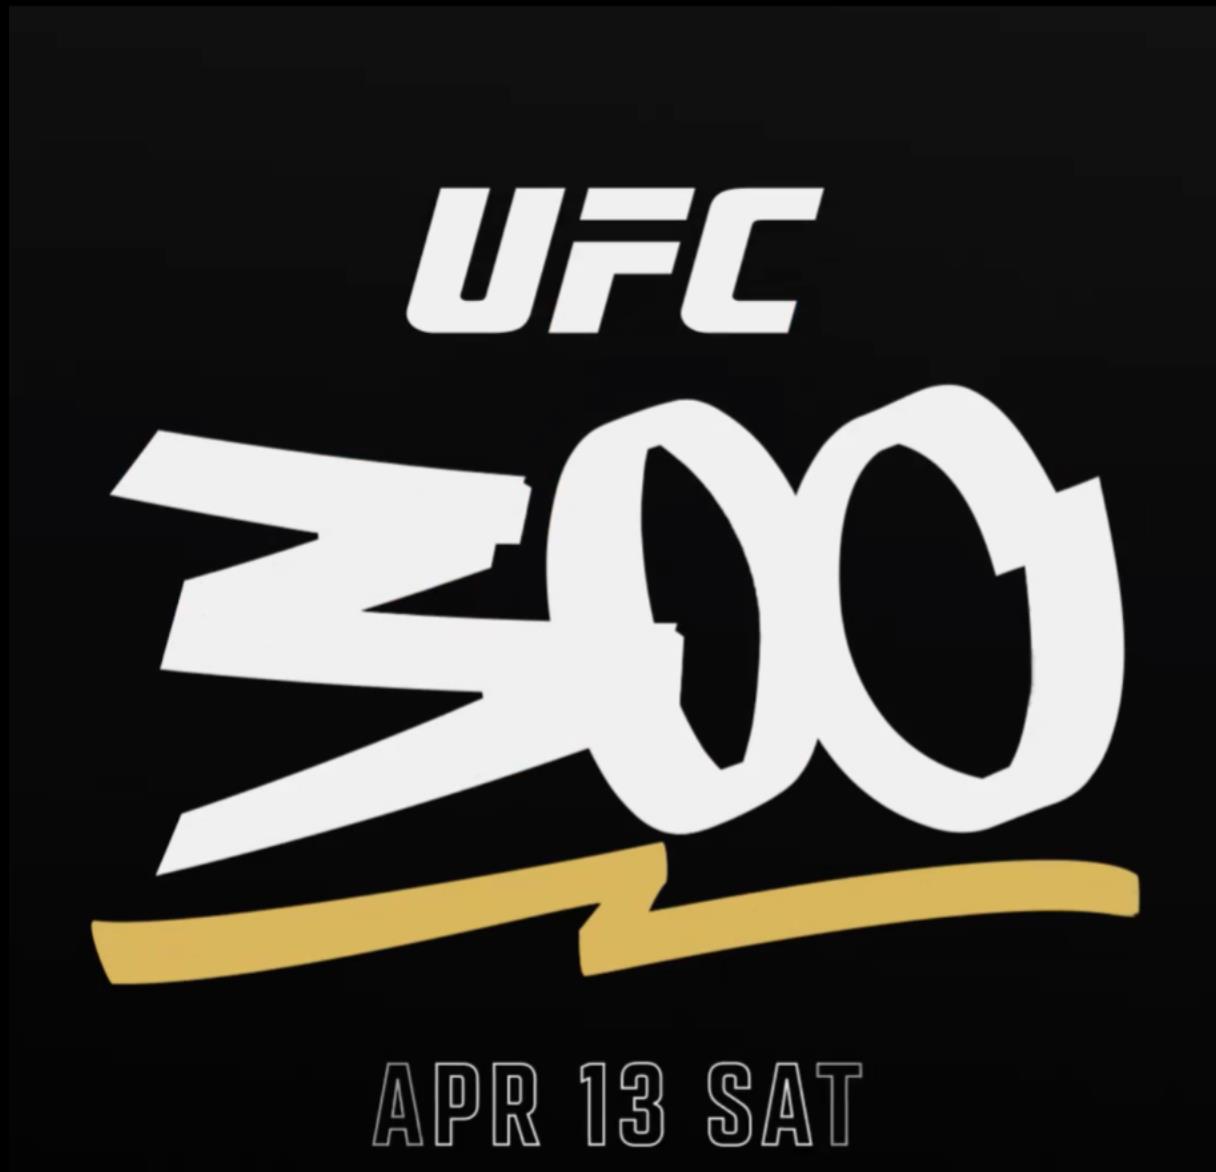 Israel Adesanya Set to Headline UFC 300